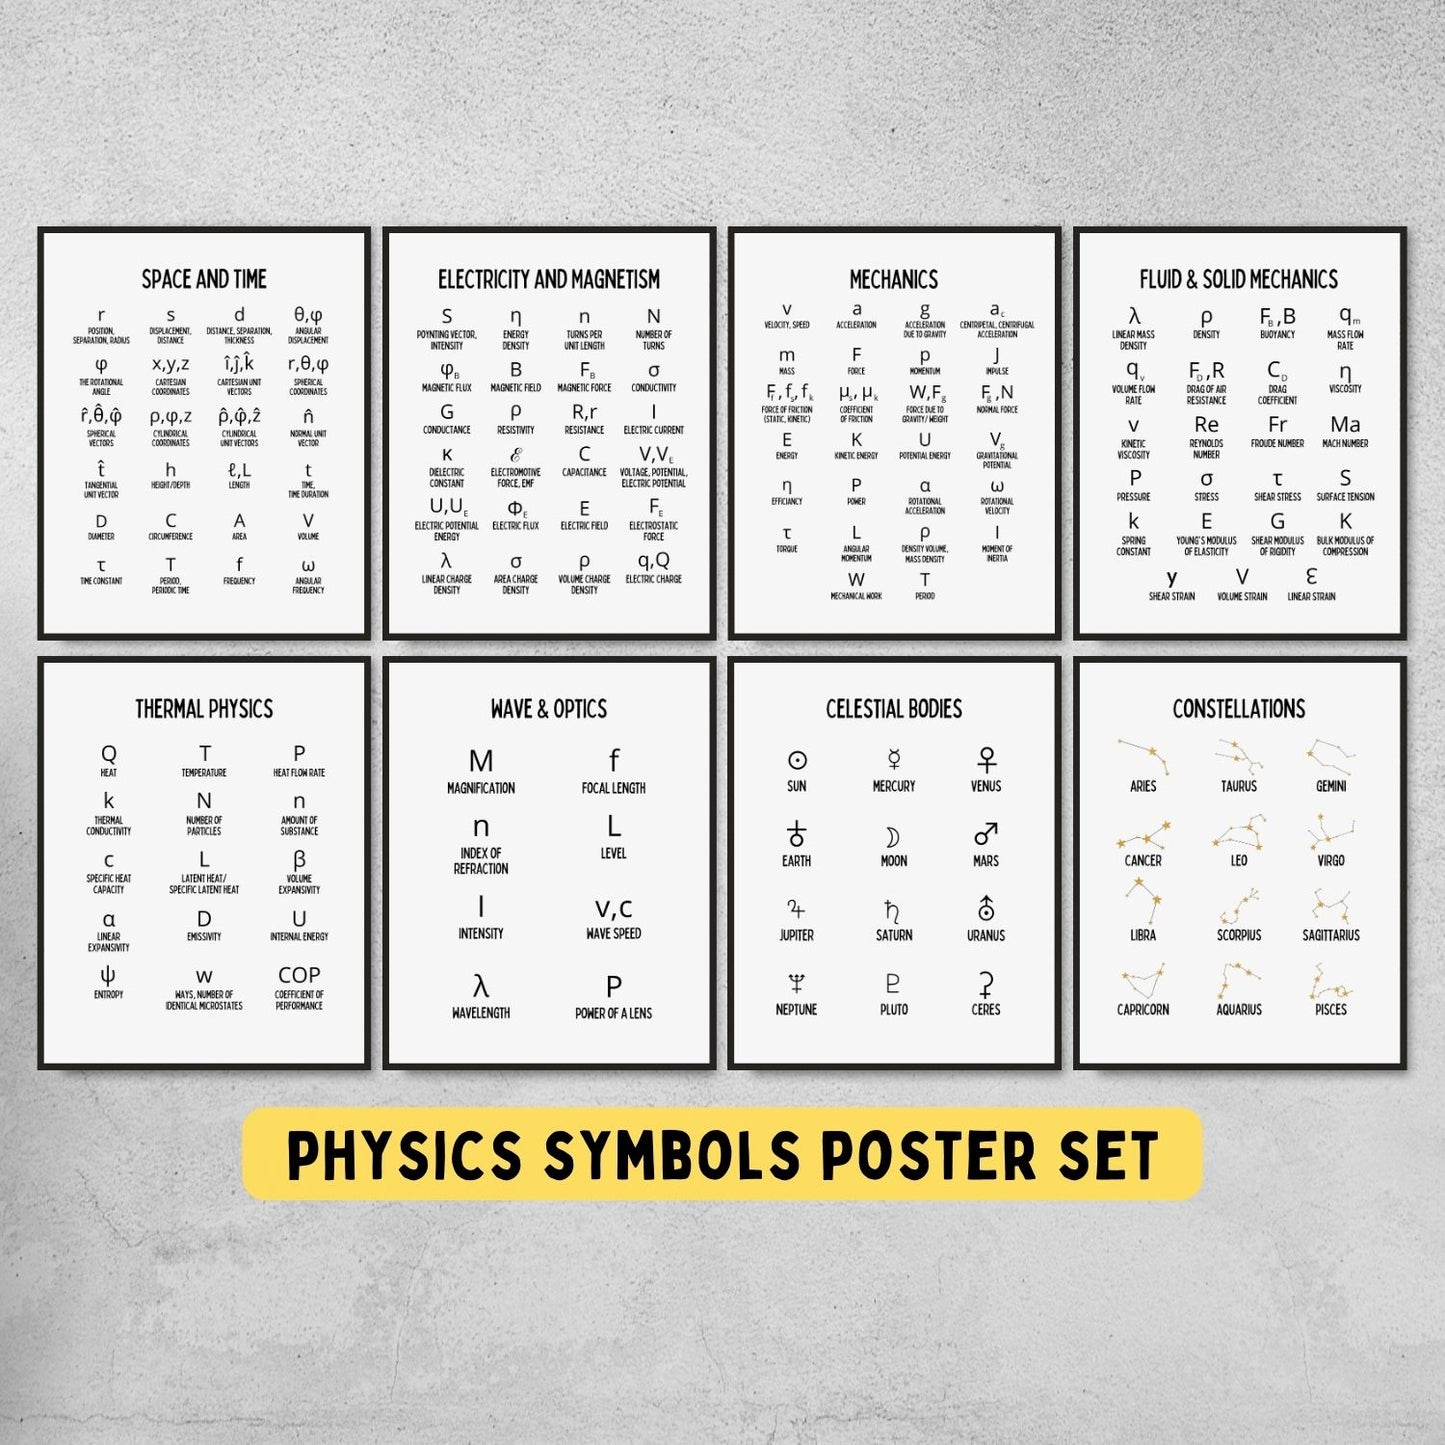 Physics symbols poster set for science classroom decor